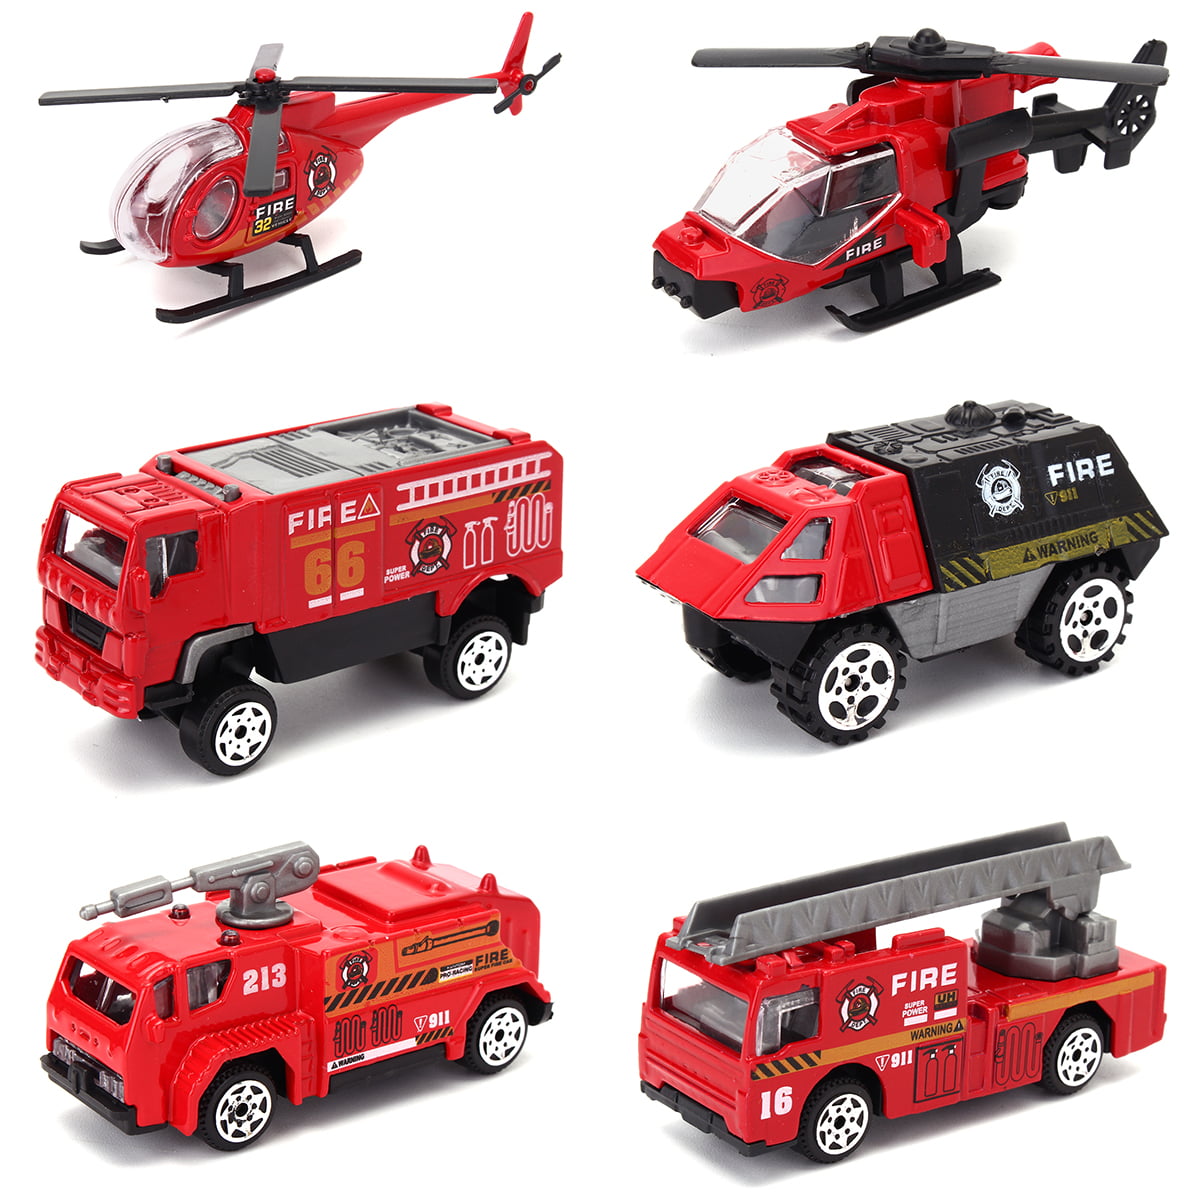 diecast vehicles toys